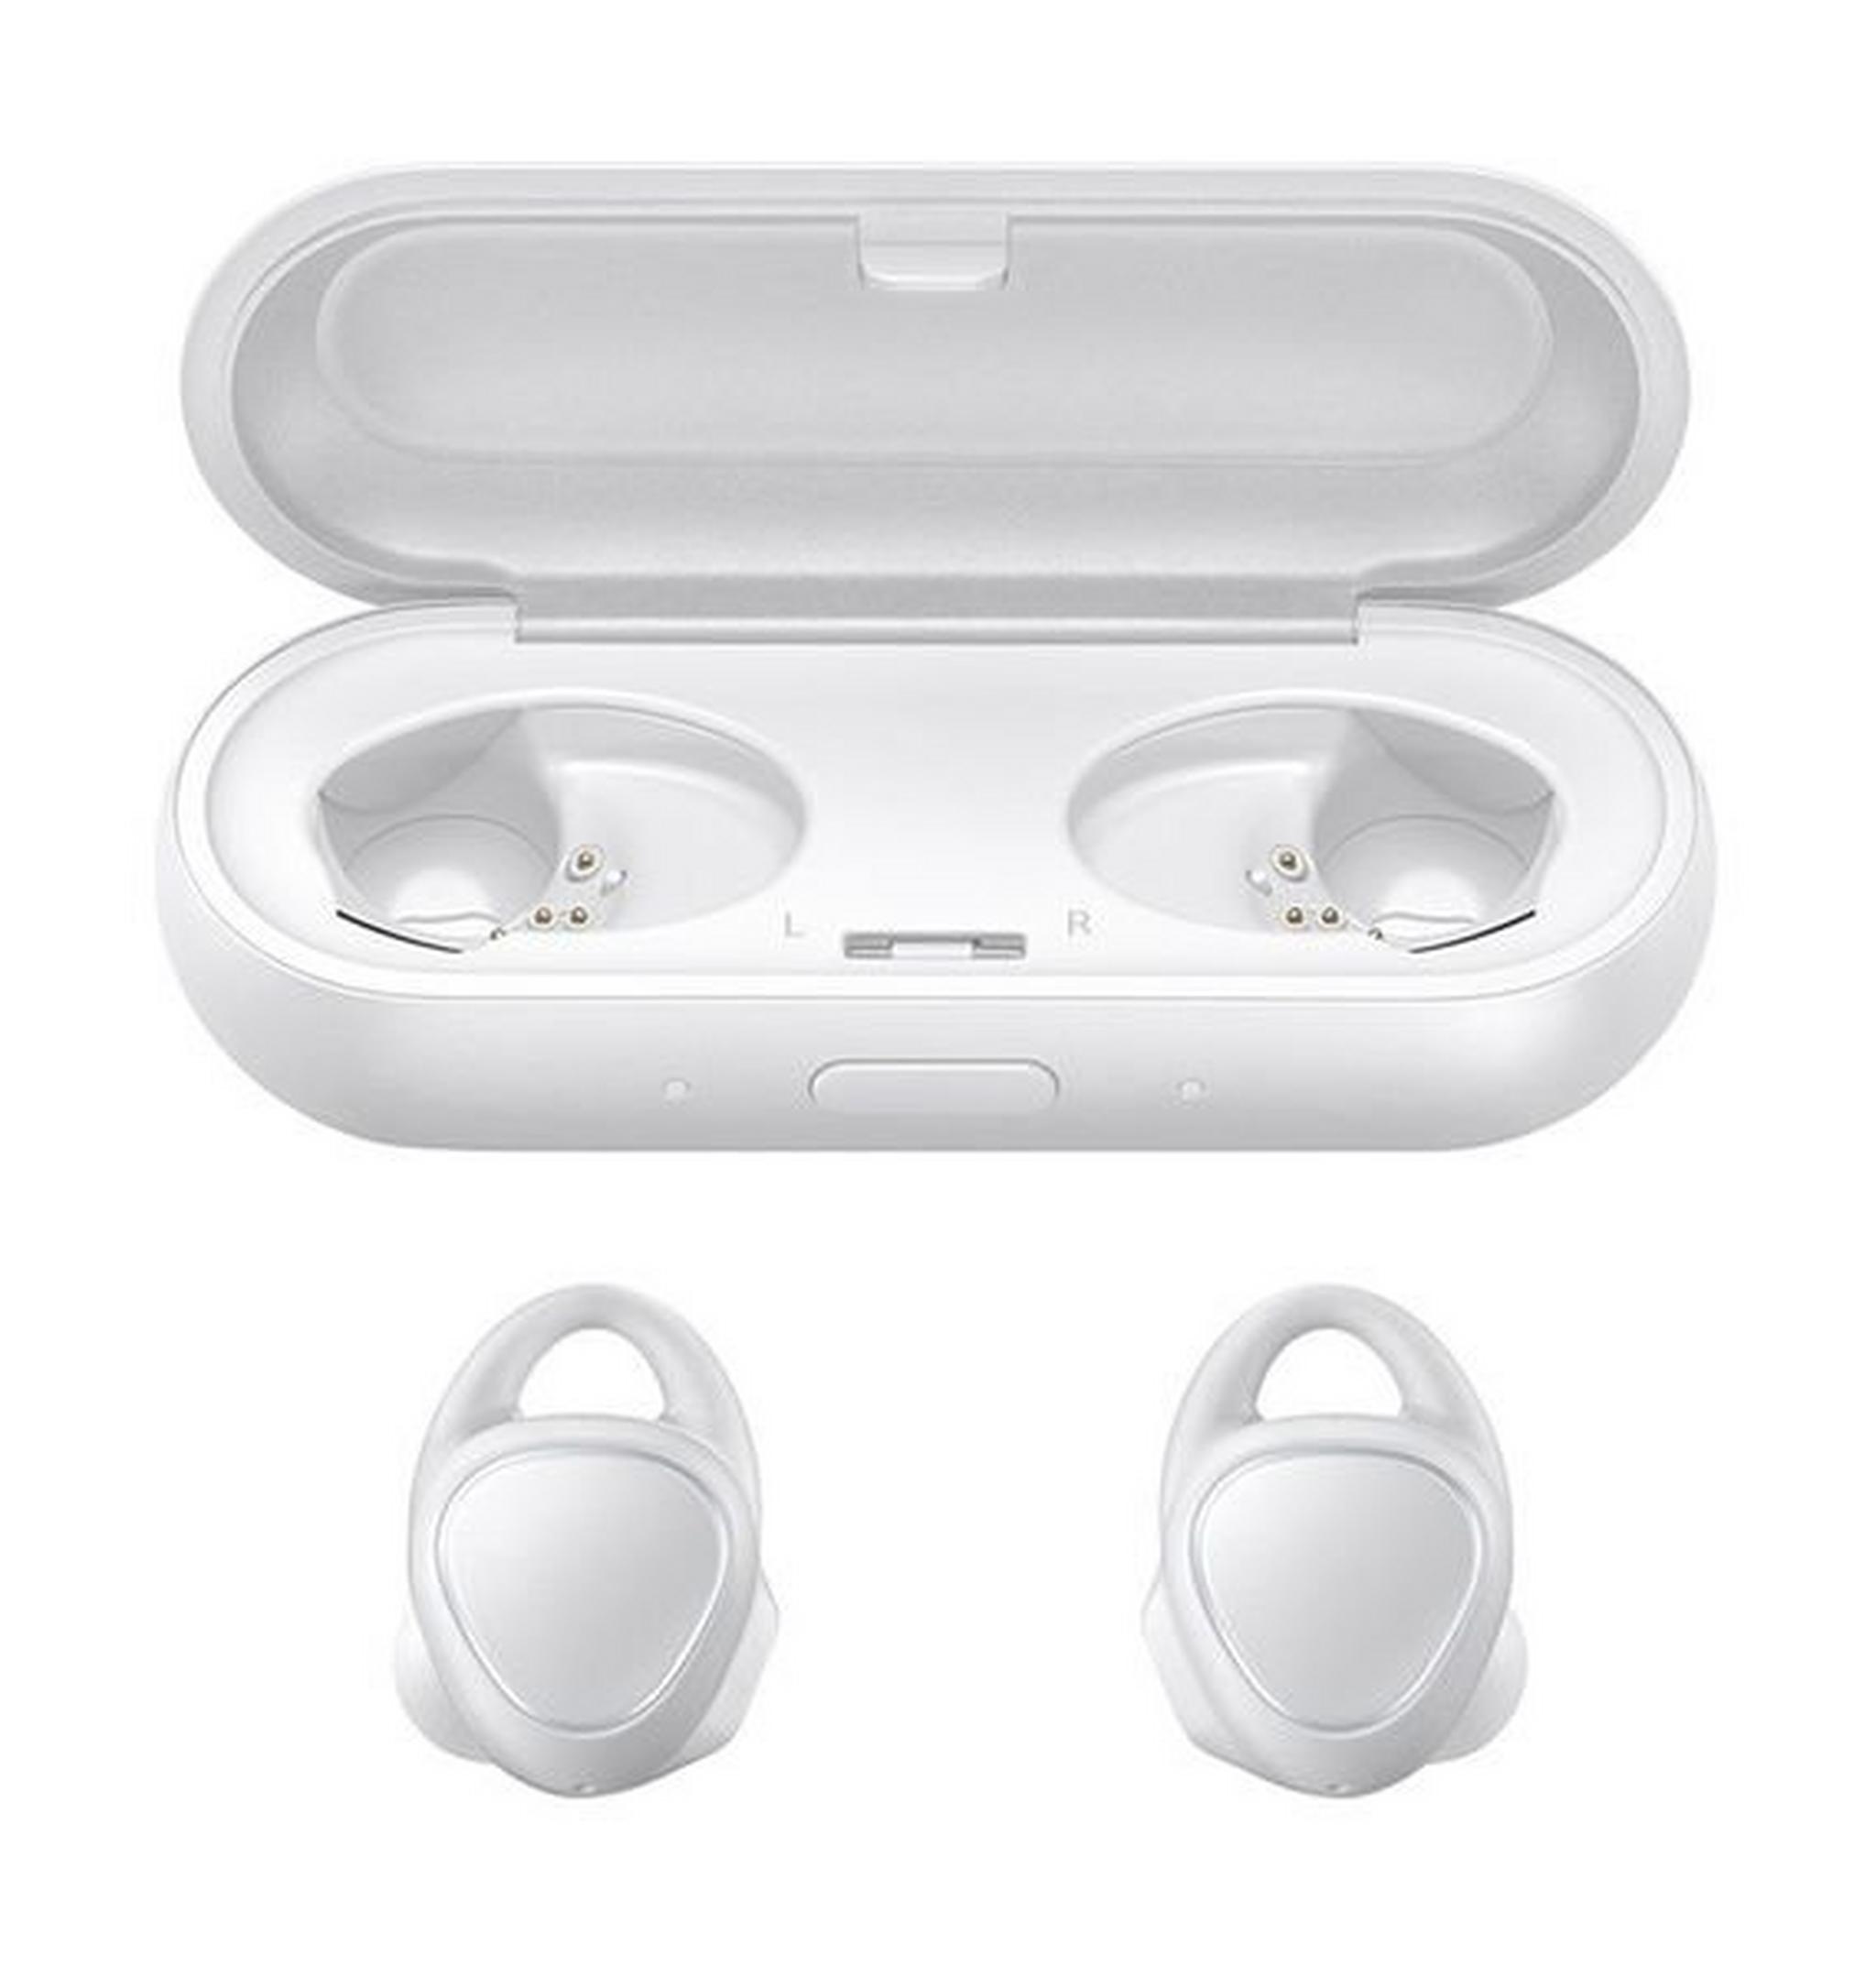 Samsung Gear IconX Wireless Earbuds – White